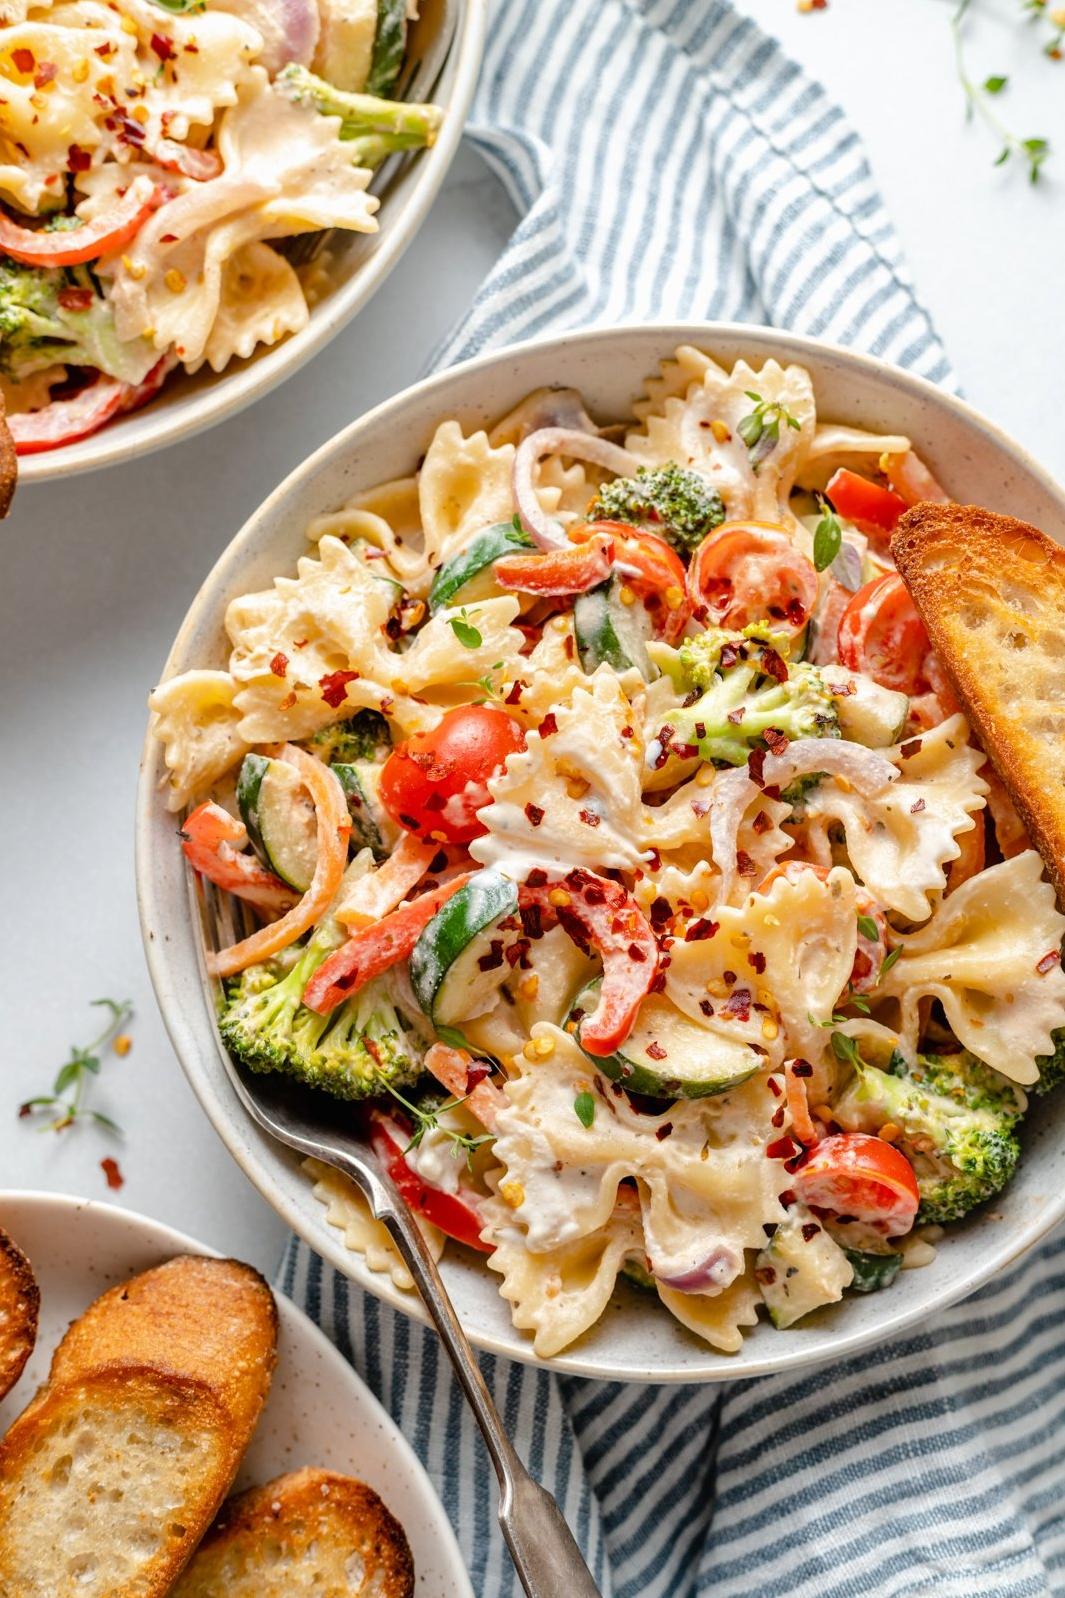  The best way to enjoy spring season? With a heaping bowl of Vegan Pasta Primavera!